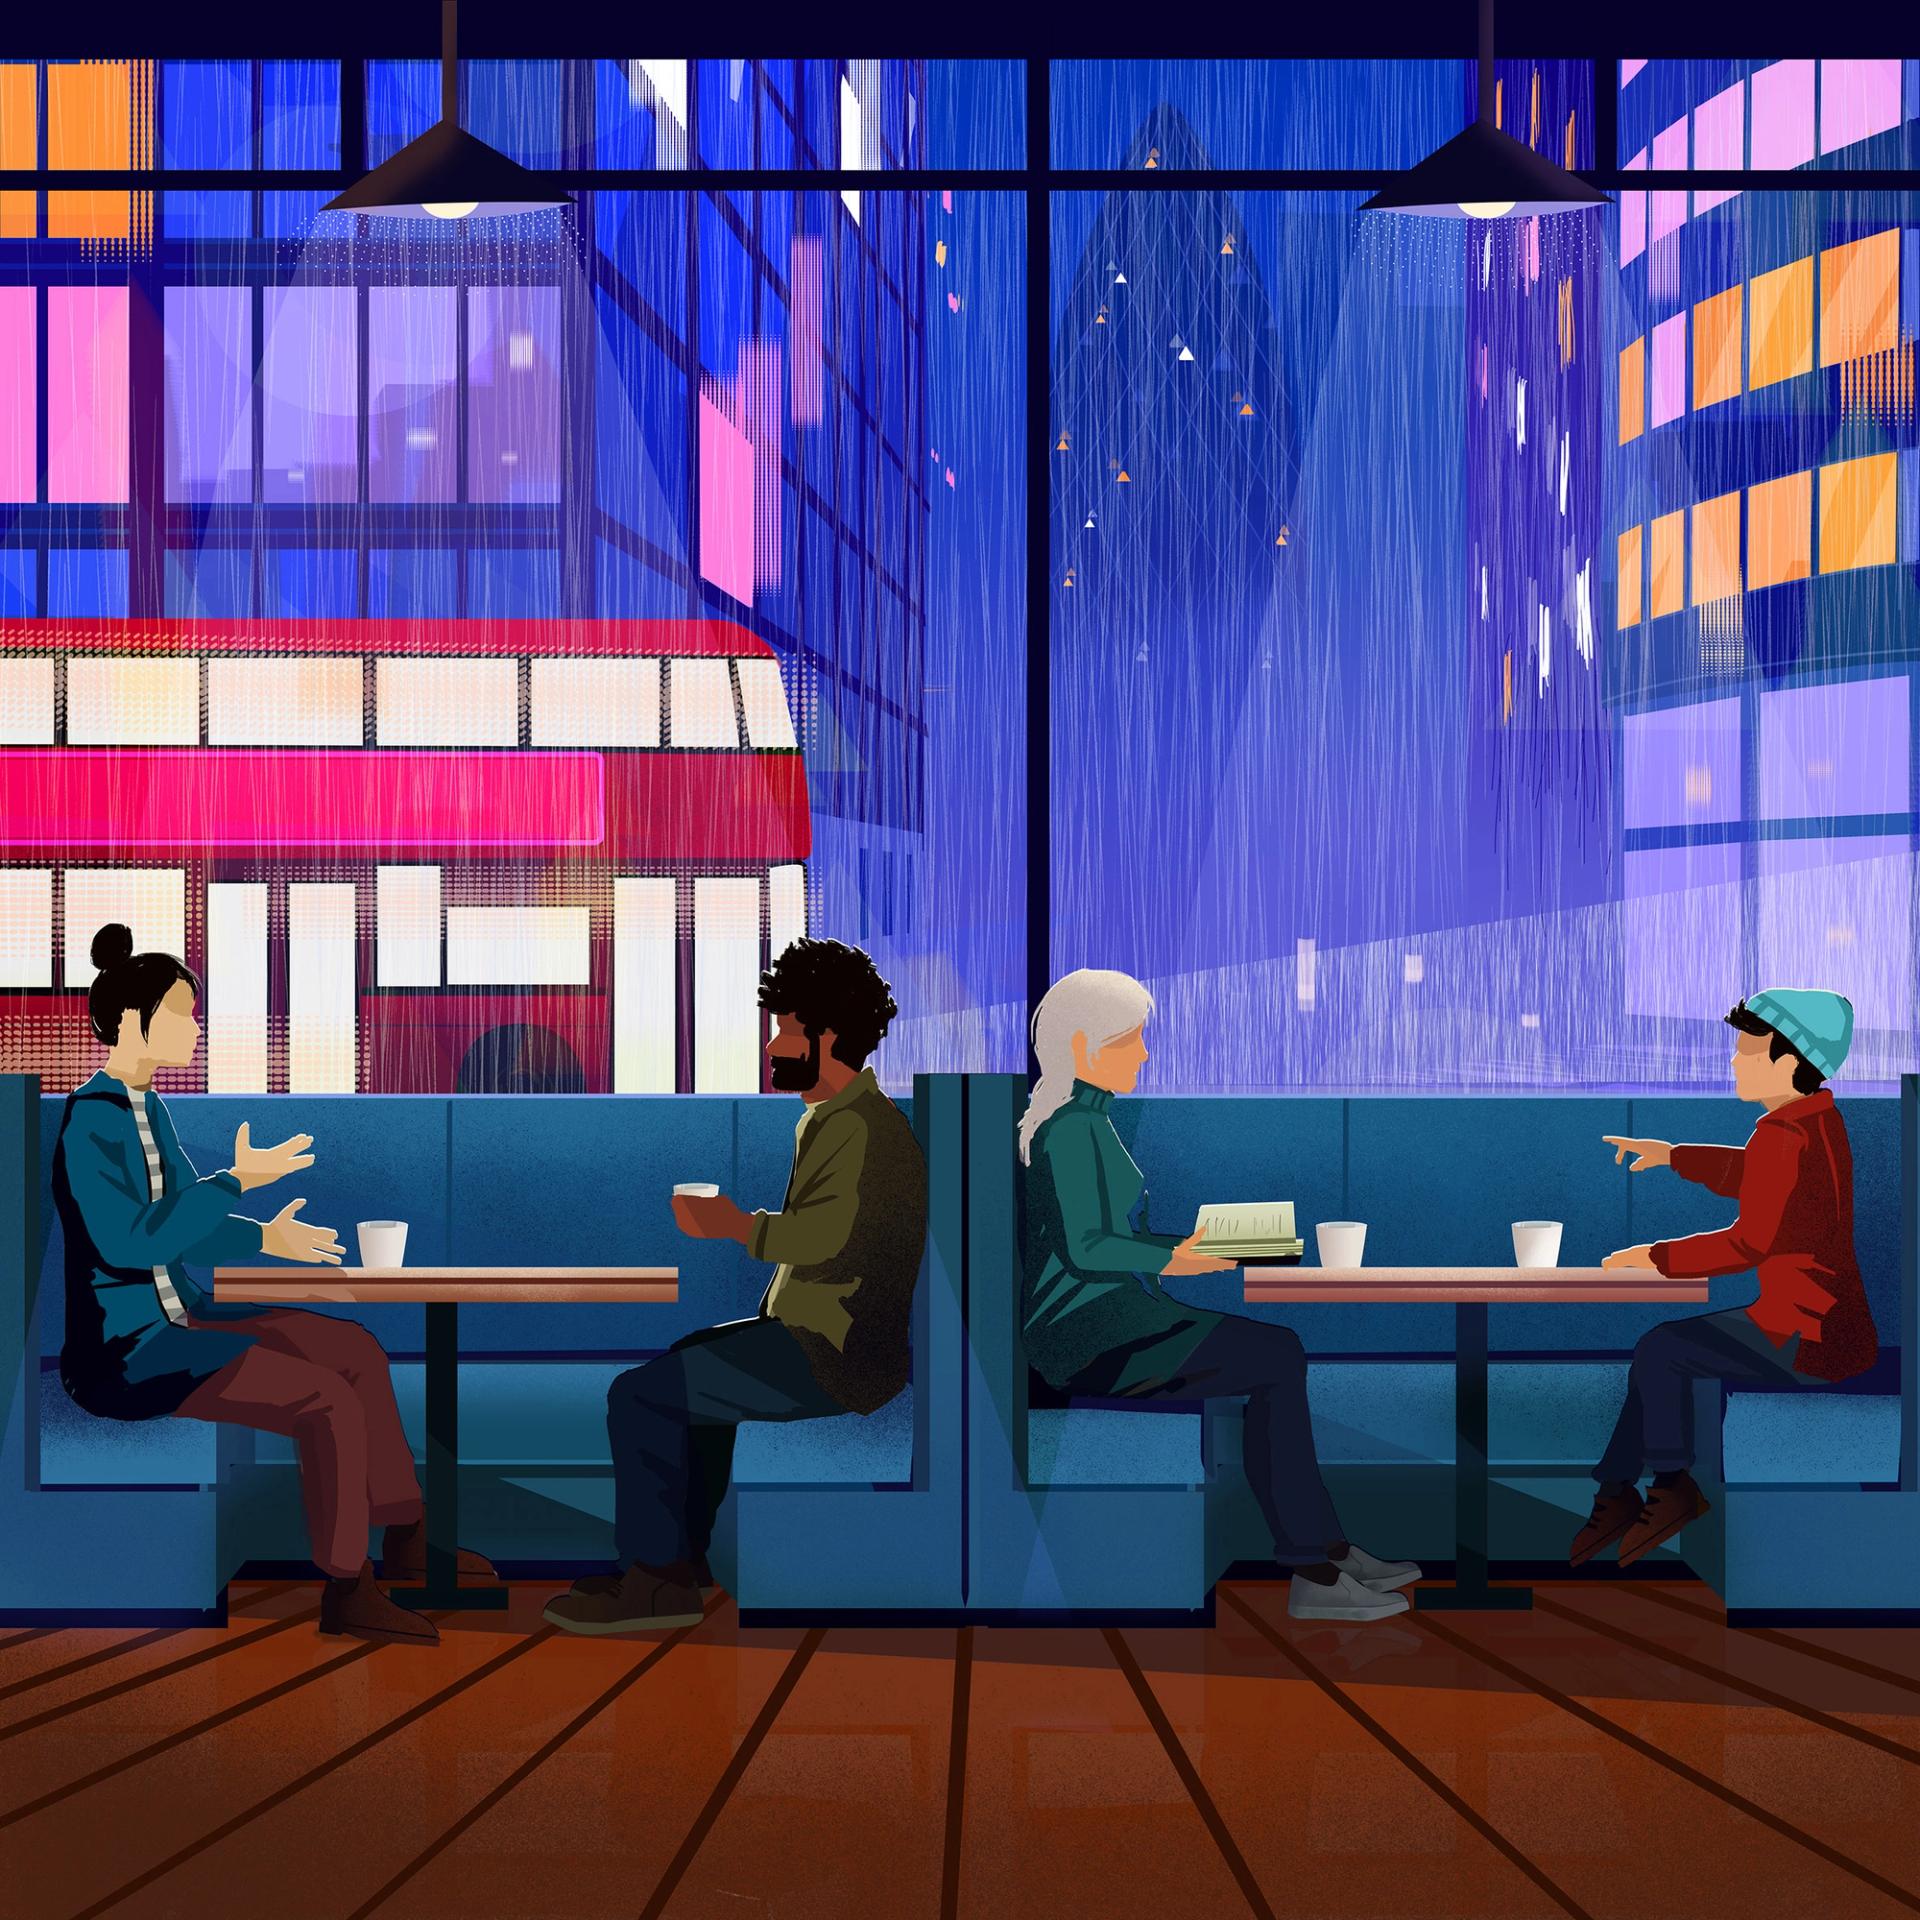 Matt Saunders illustrates a cosy cafe scene as gentle rain falls outside